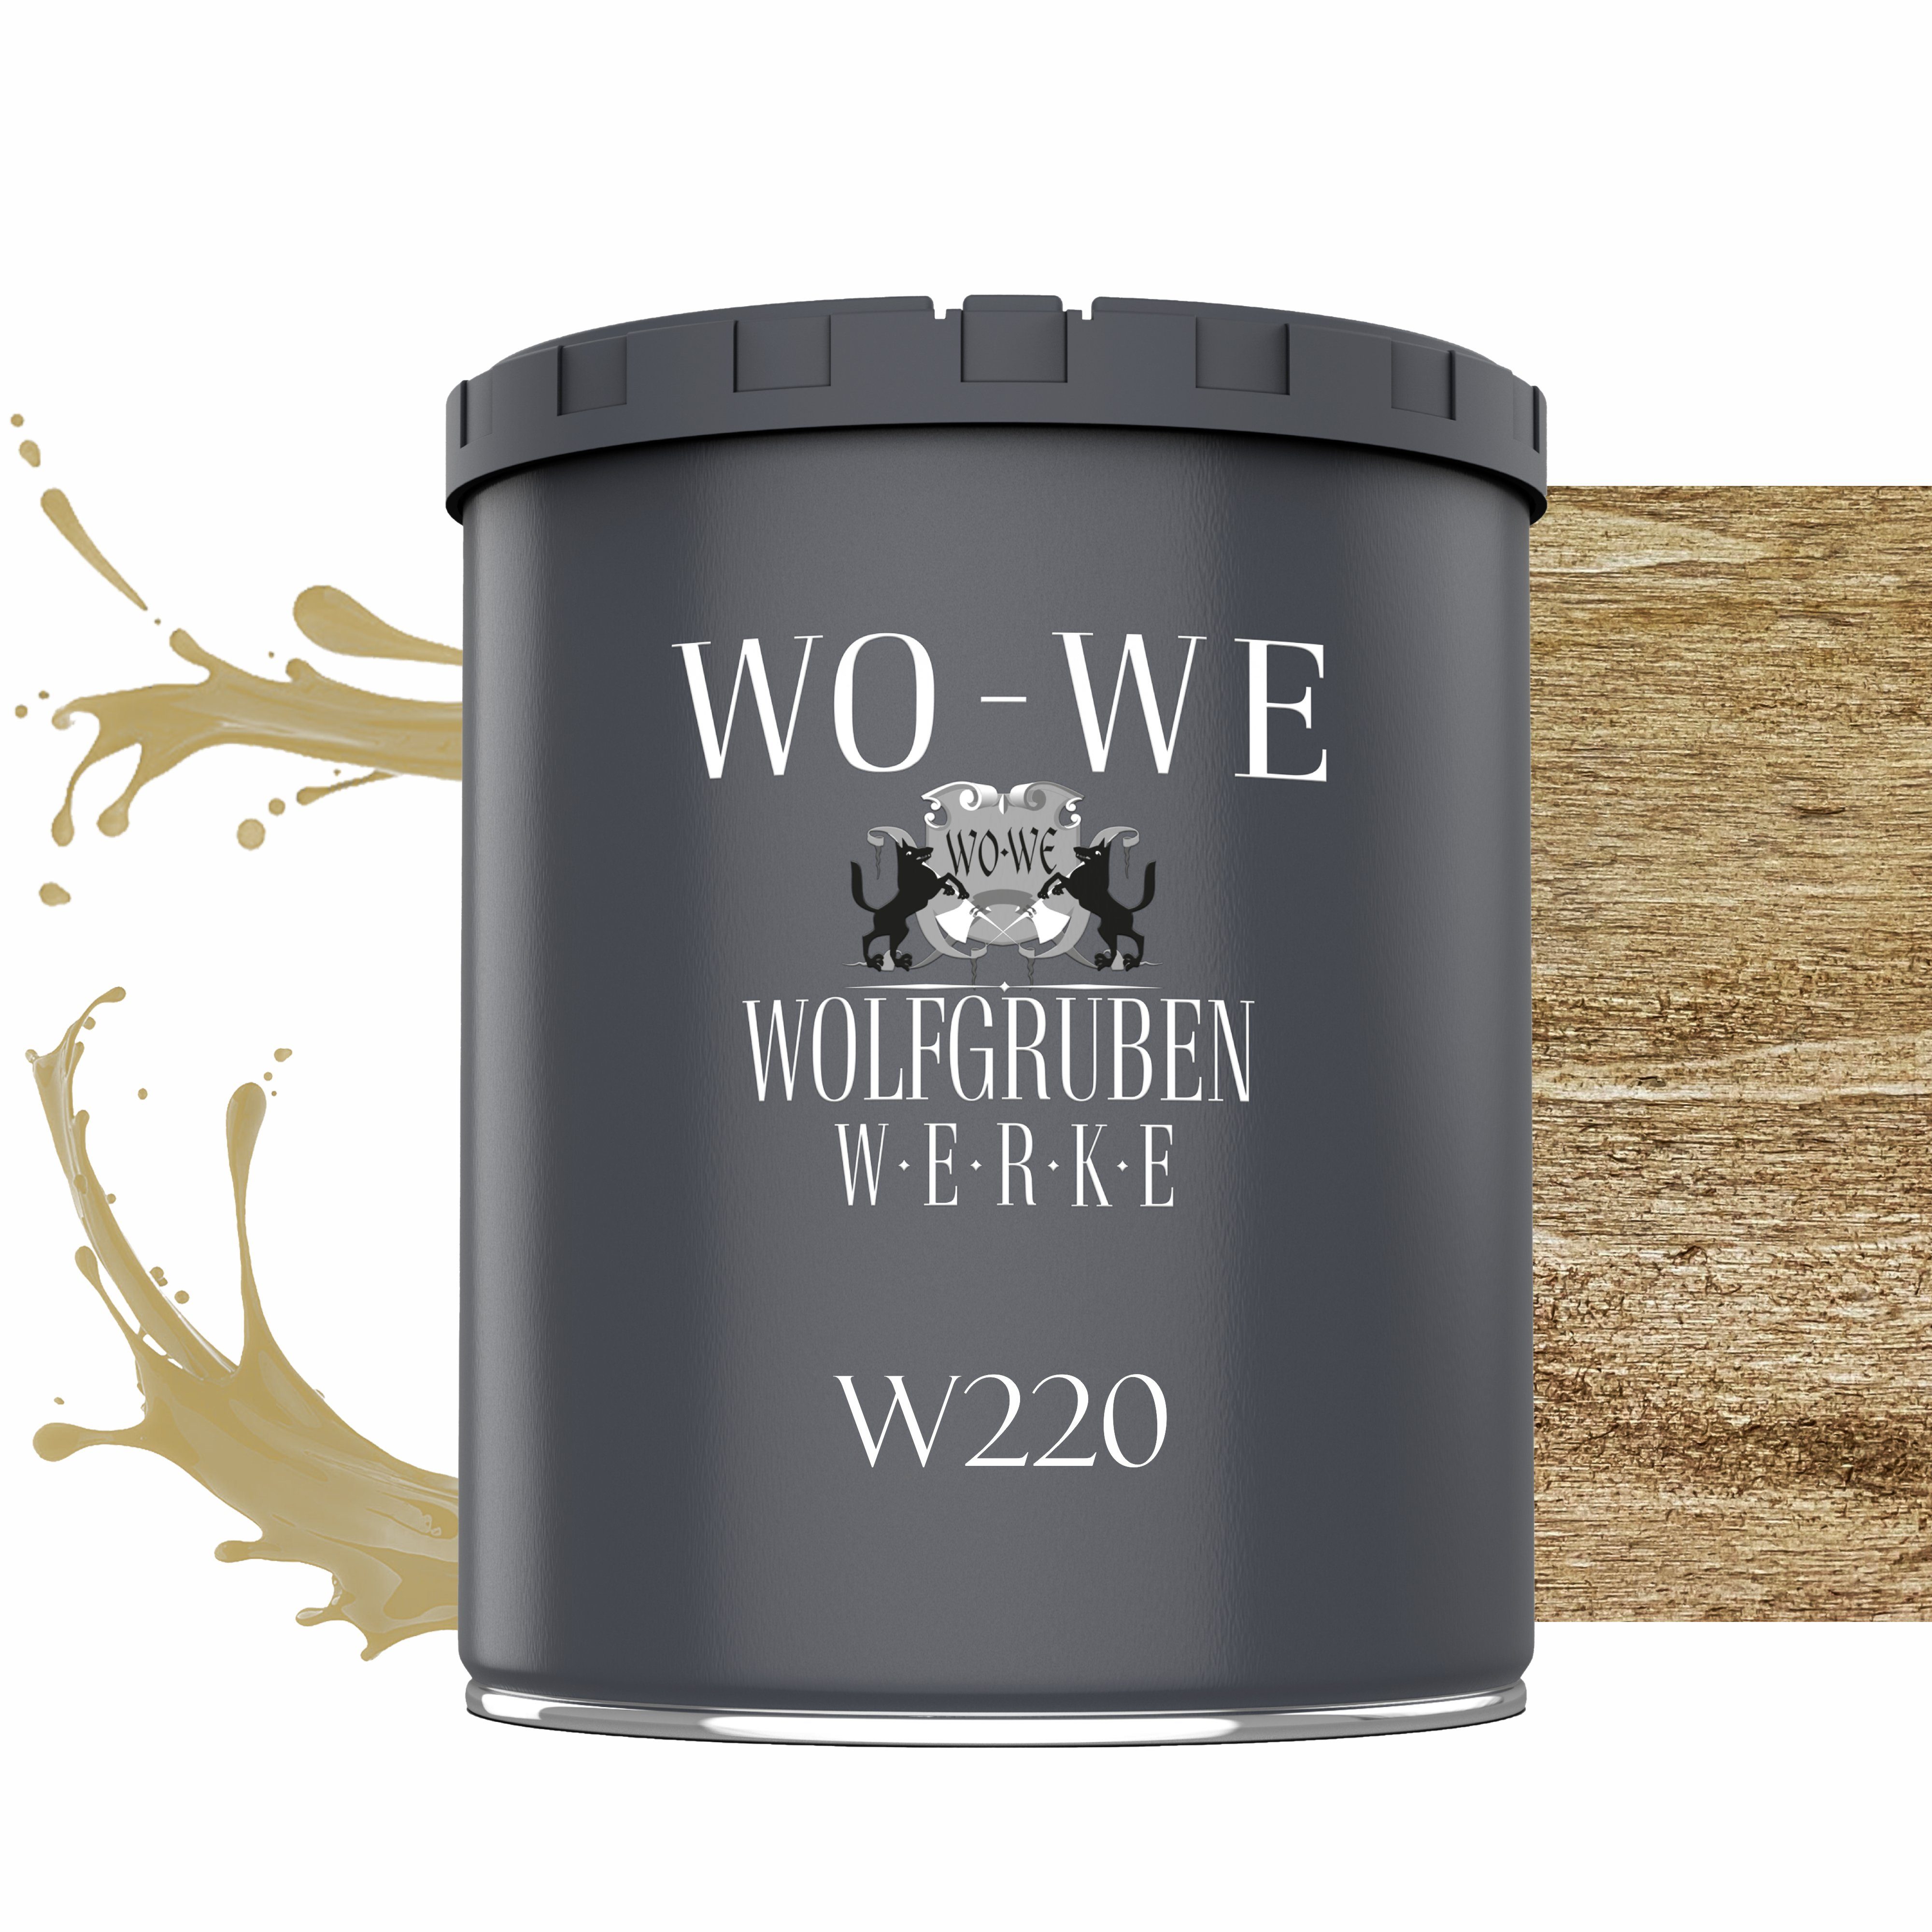 WO-WE Dickschichtlasur Holzschutzlasur 2in1 Holzlasur W220, 1-2,5L, Lösemittelfrei, UV-stabil Eiche Hell